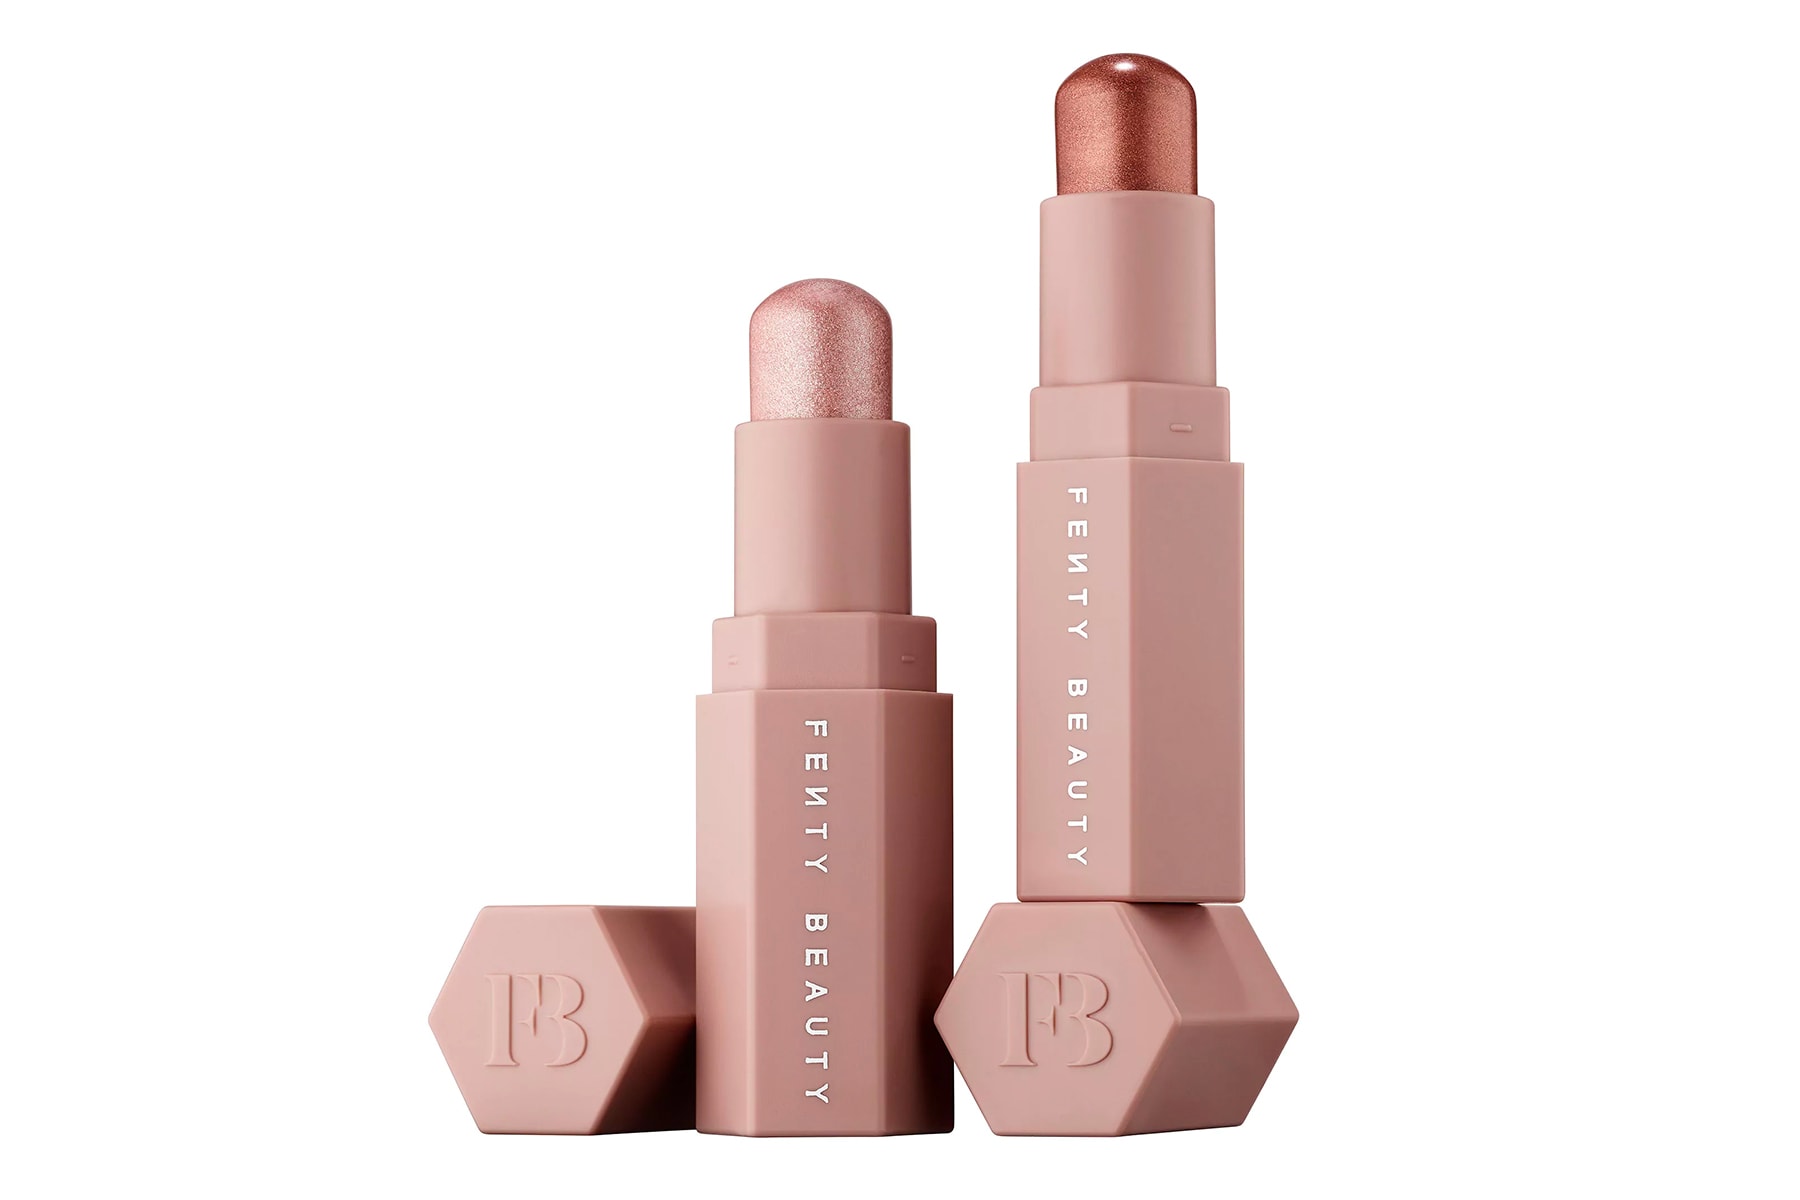 Fenty Beauty Rihanna Lil Match Stix Duo Mini Shimmer Skinstick Set Starstruck Sinamon Highlighter Makeup Release Price Sephora Where to Buy Cosmetics